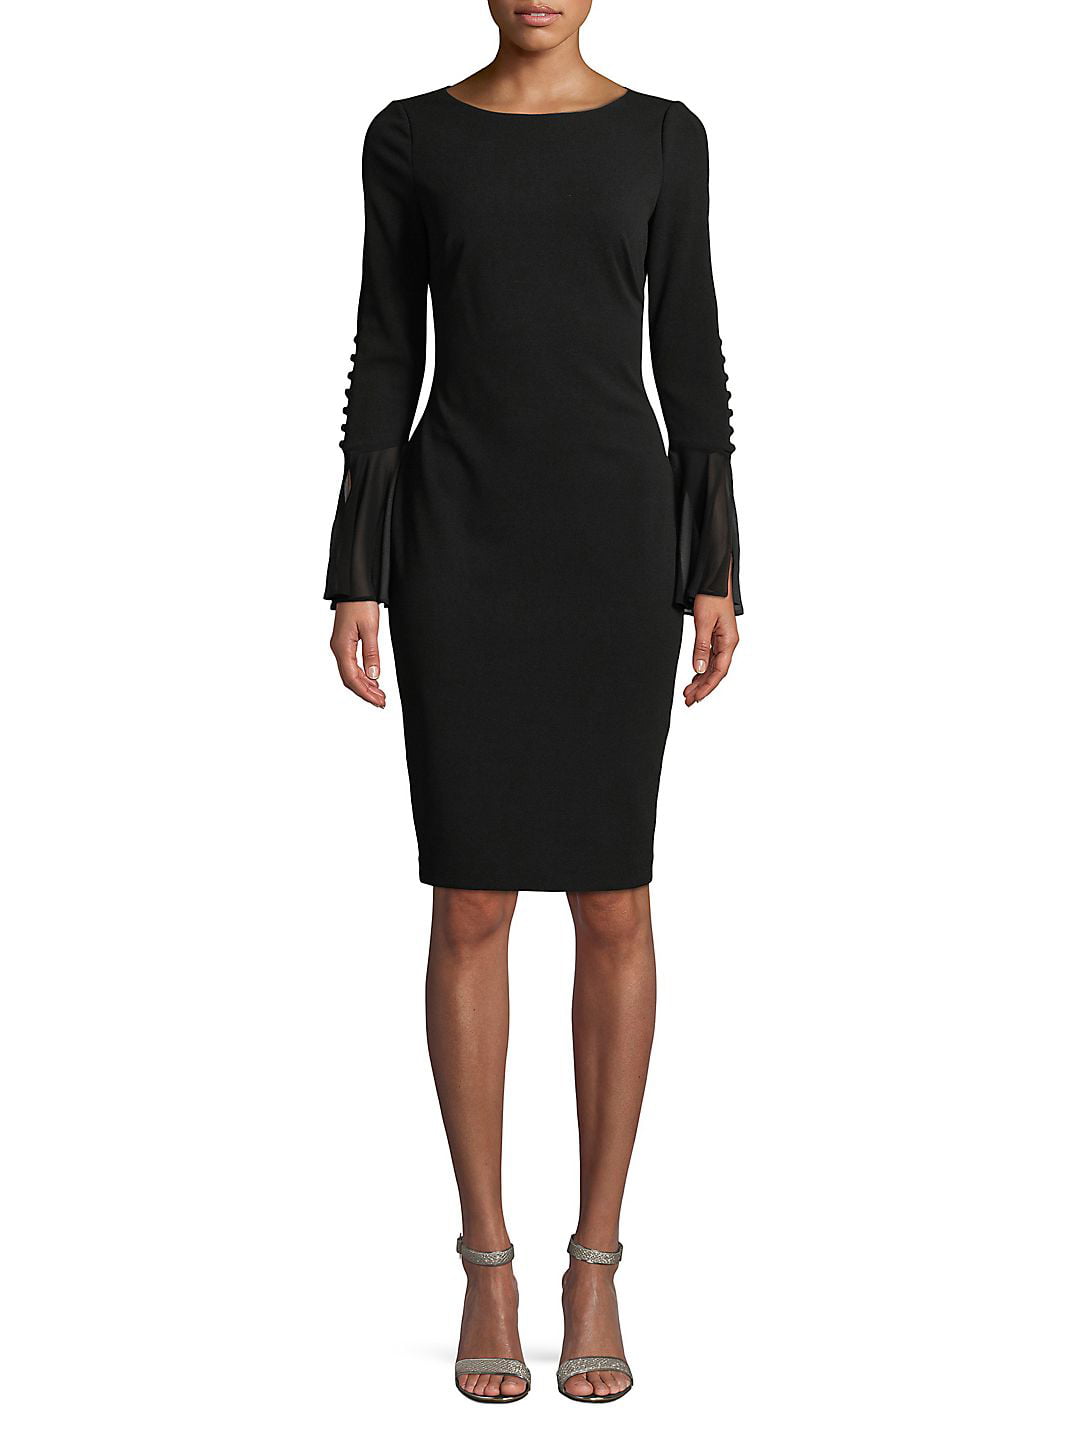 Calvin Klein Ruffle-Sleeve Sheath Dress, Black, Size 4 - Walmart.com